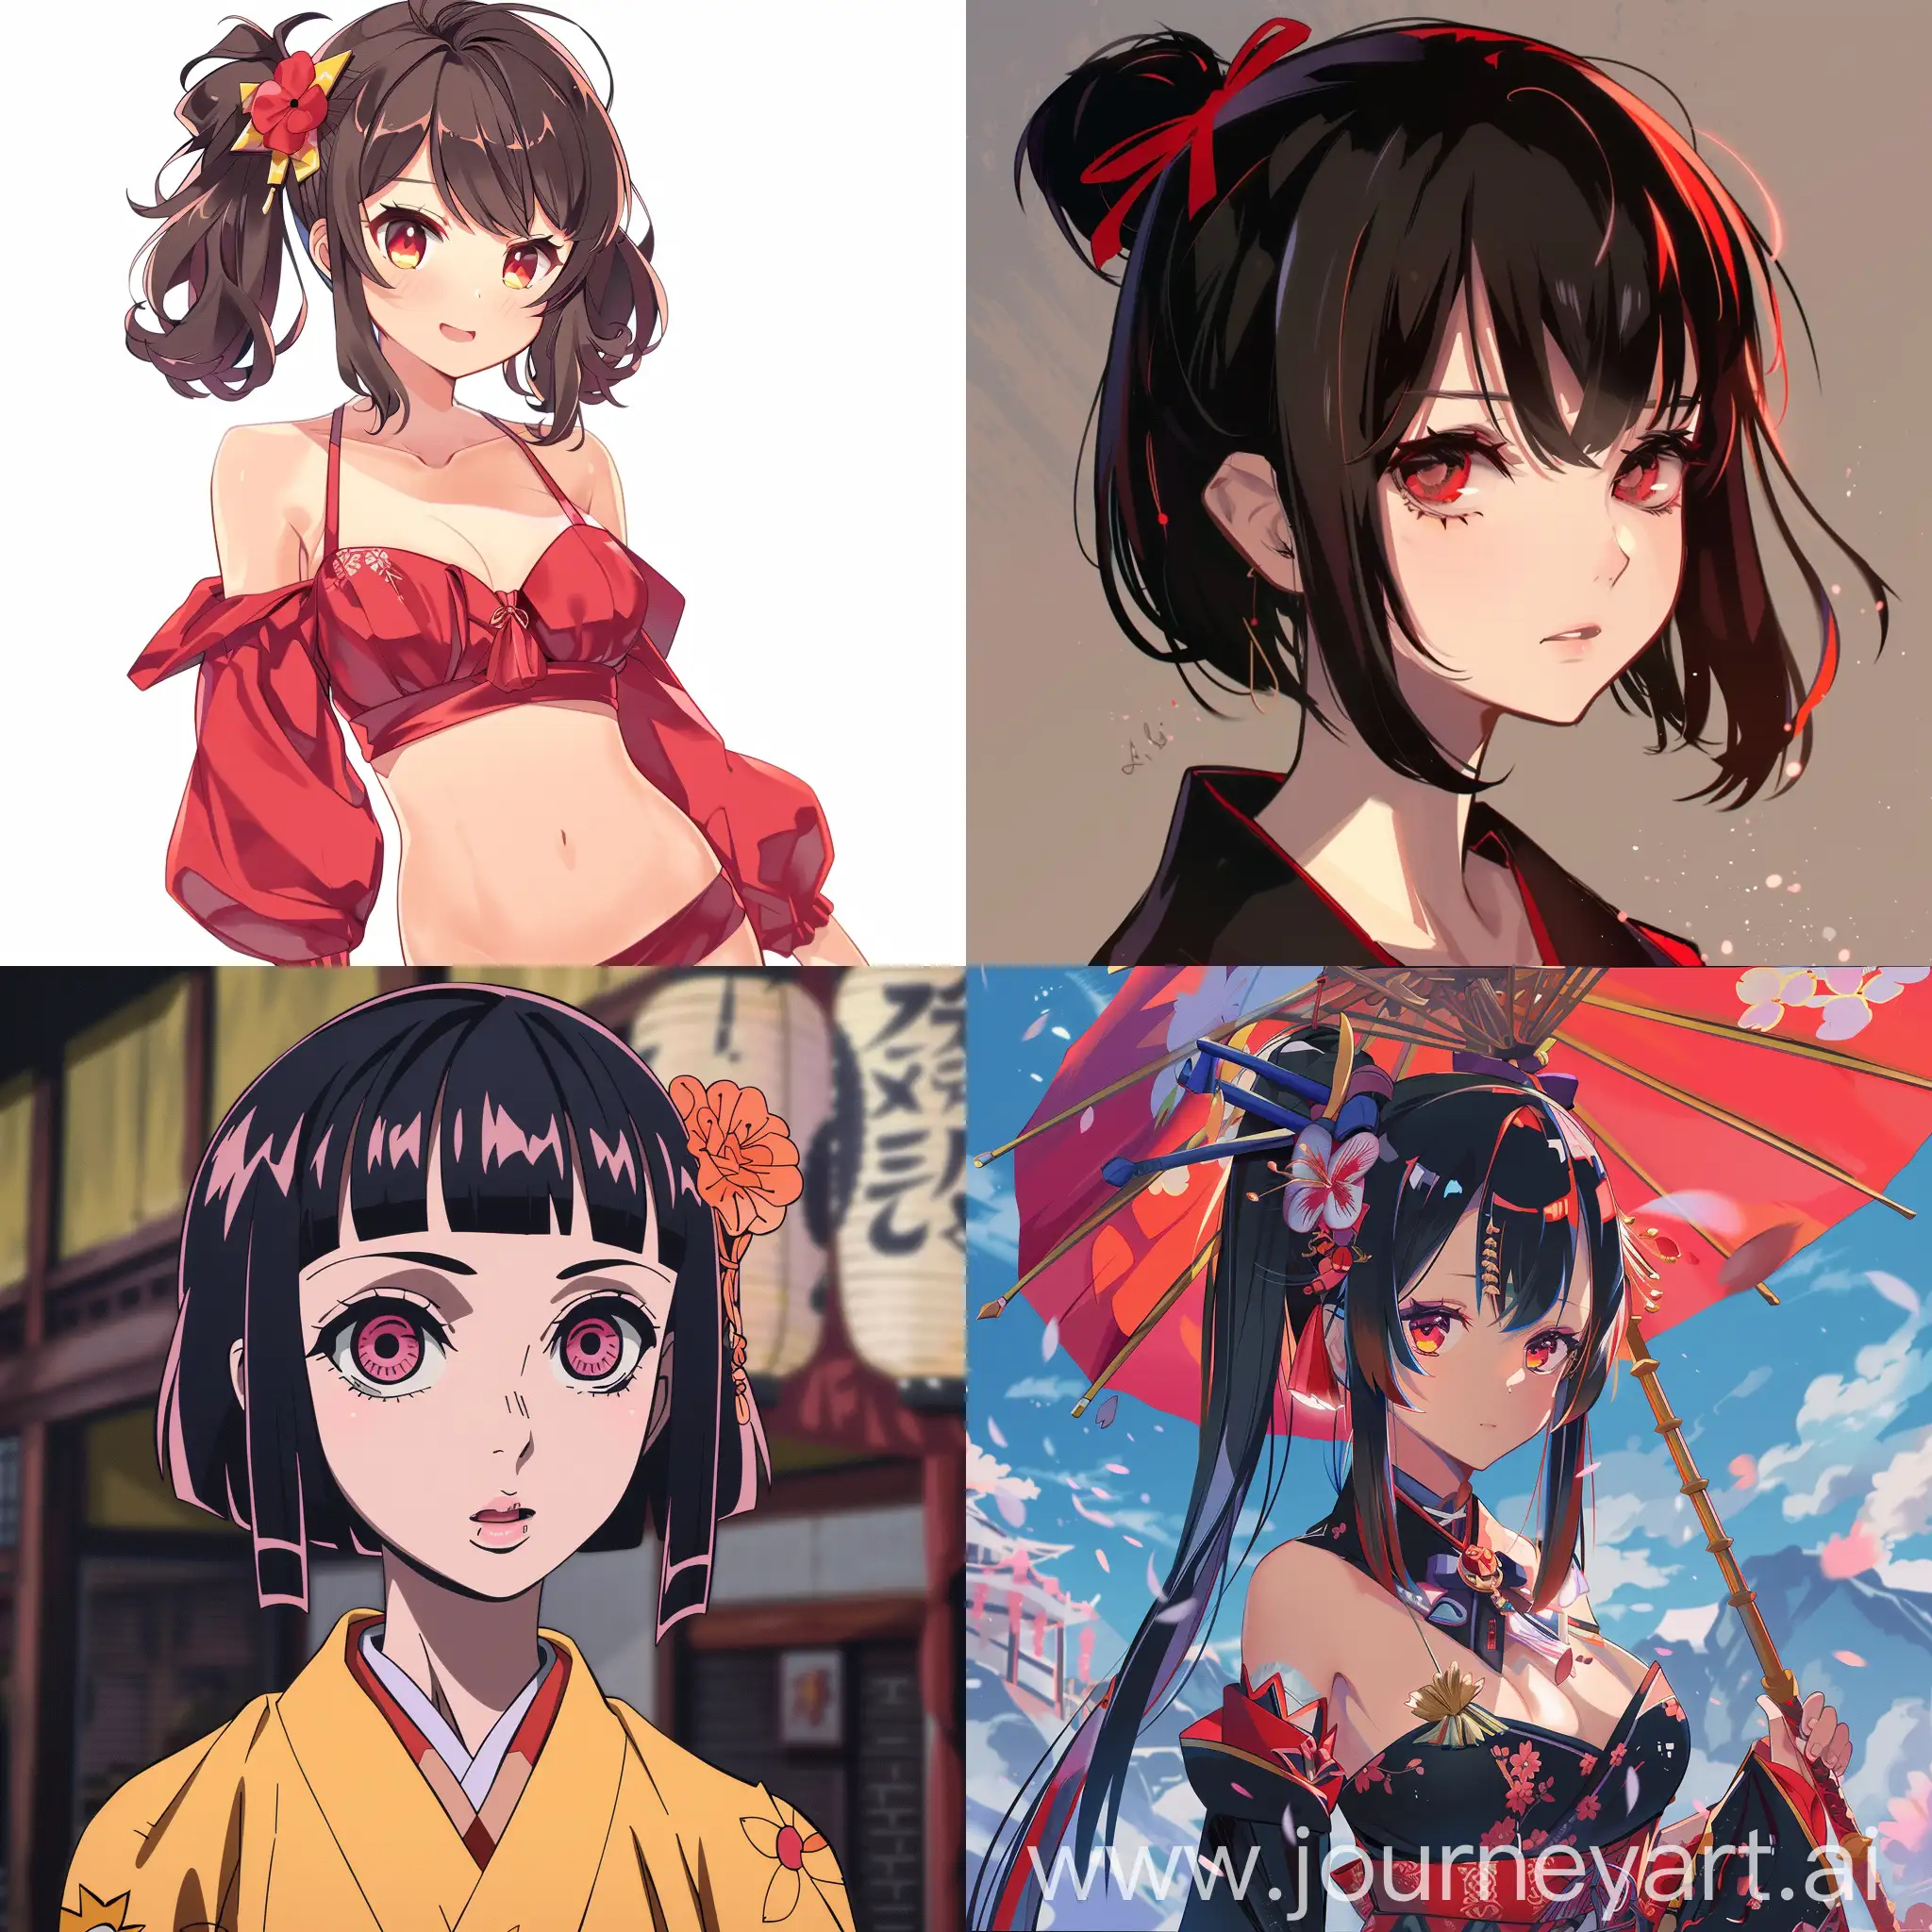 Kiryuu-Aika-Anime-Character-Portrait-with-Vibrant-Colors